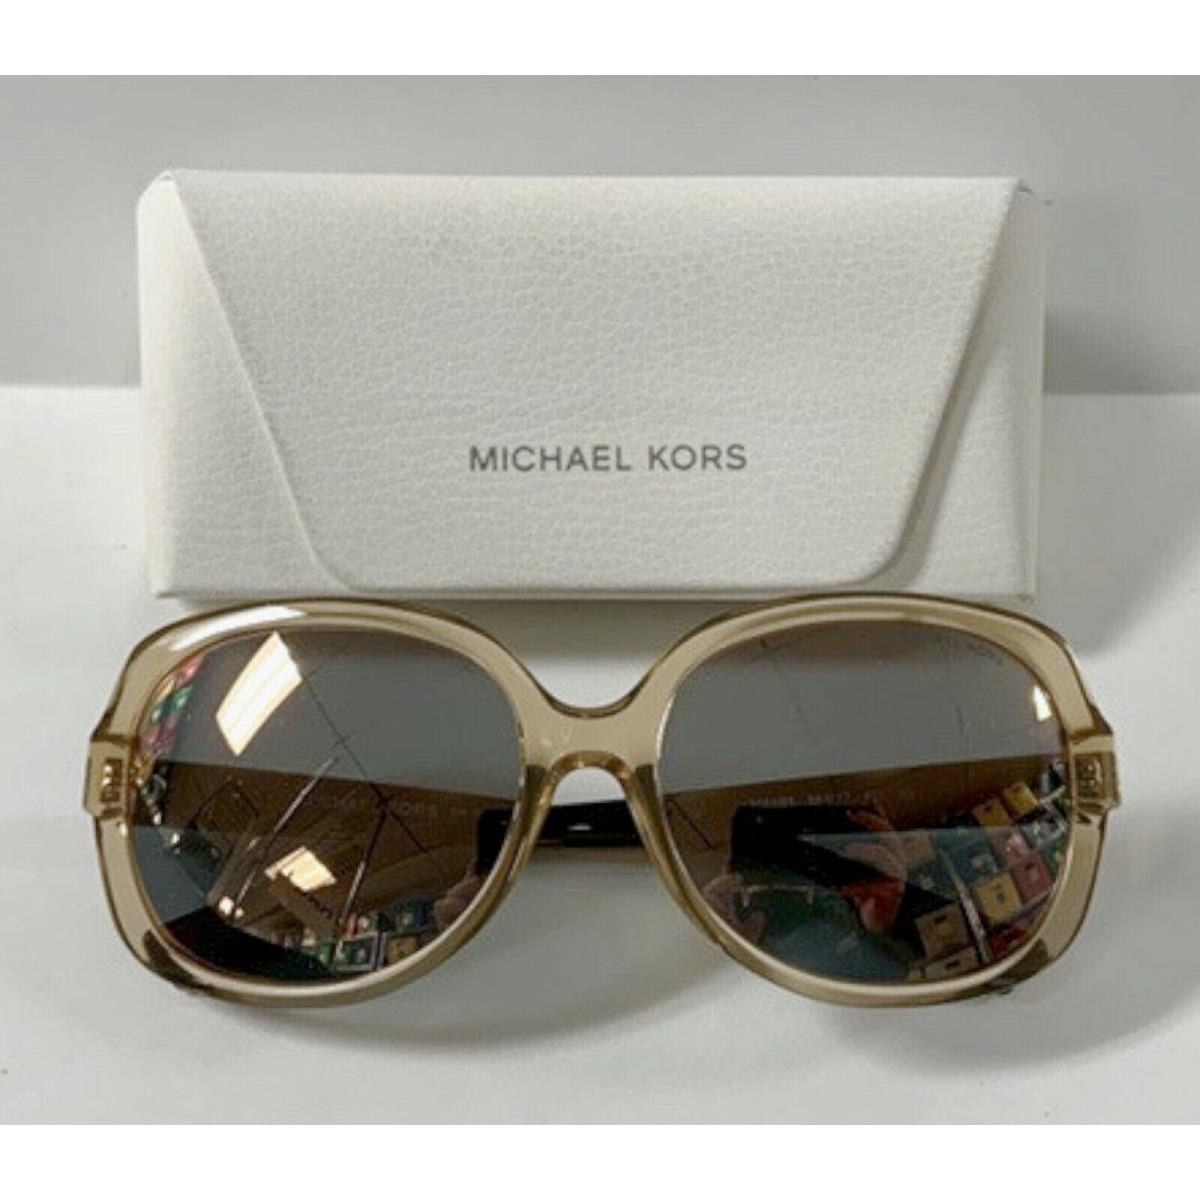 Michael Kors sunglasses  - Clear Tortoise Smokey Transparent Frame, Beige Lens